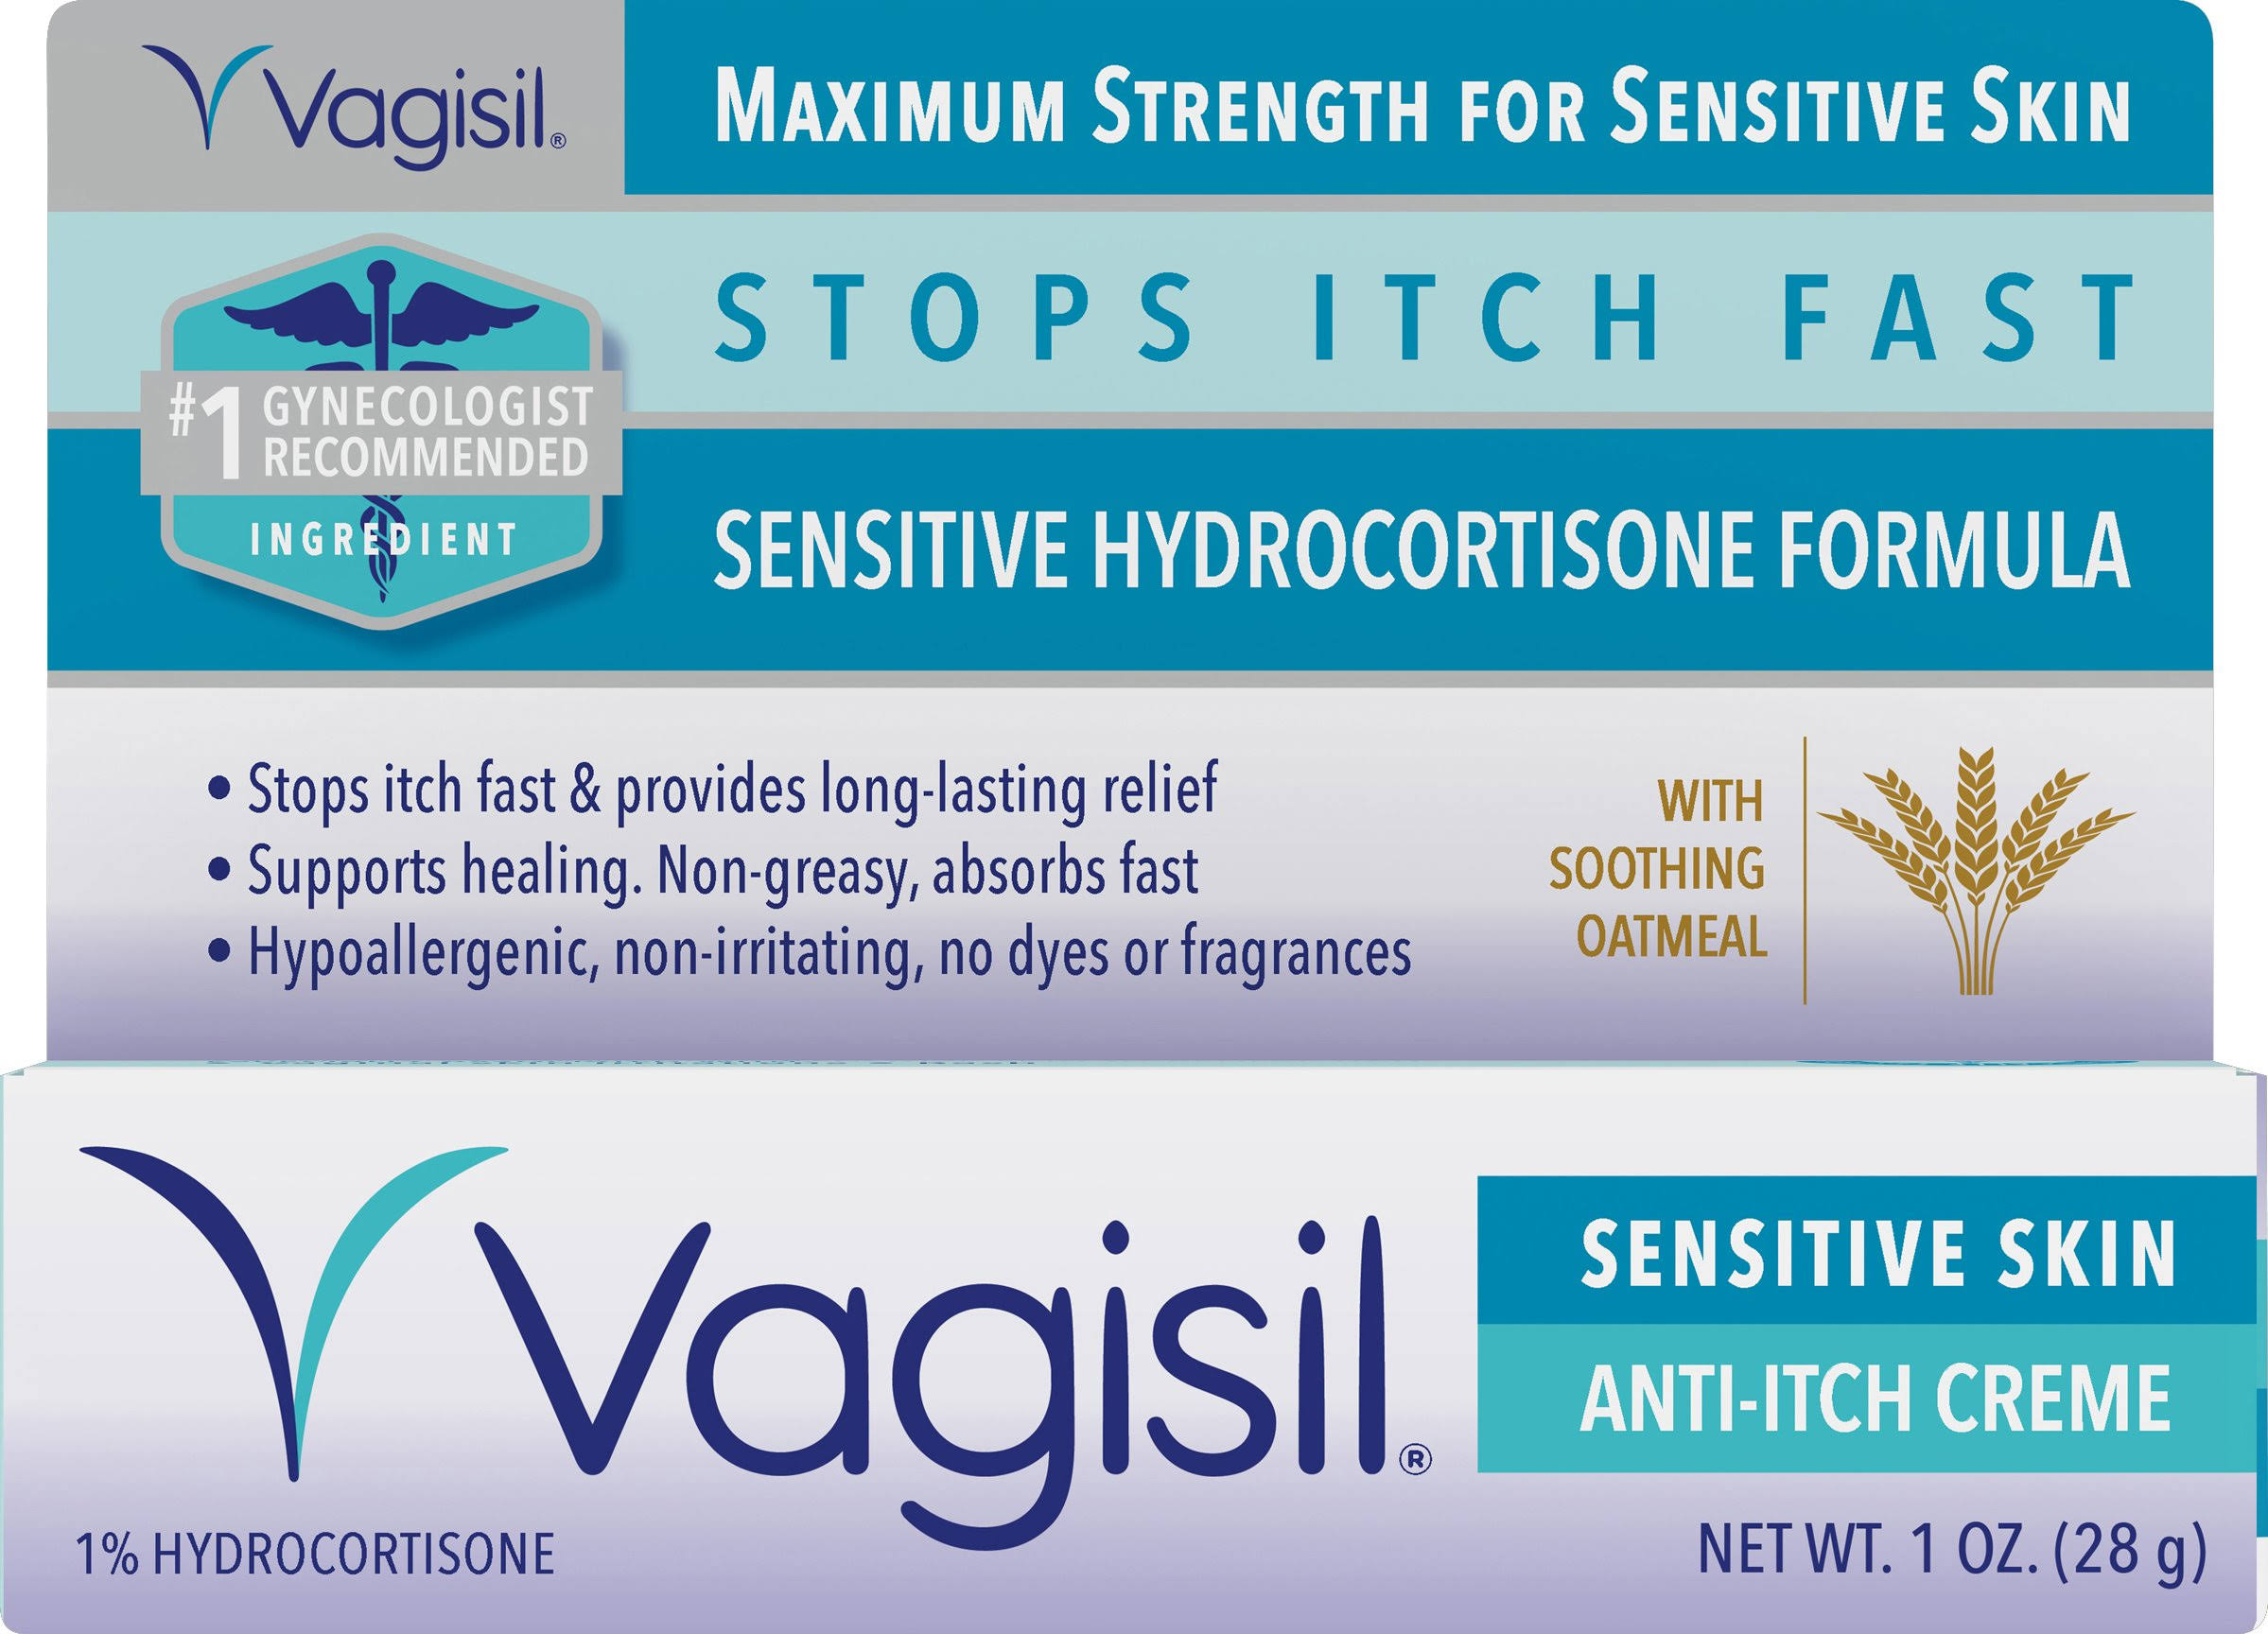 Vagisil Maximum Strength Sensitive Skin Anti Itch Creme - 1oz